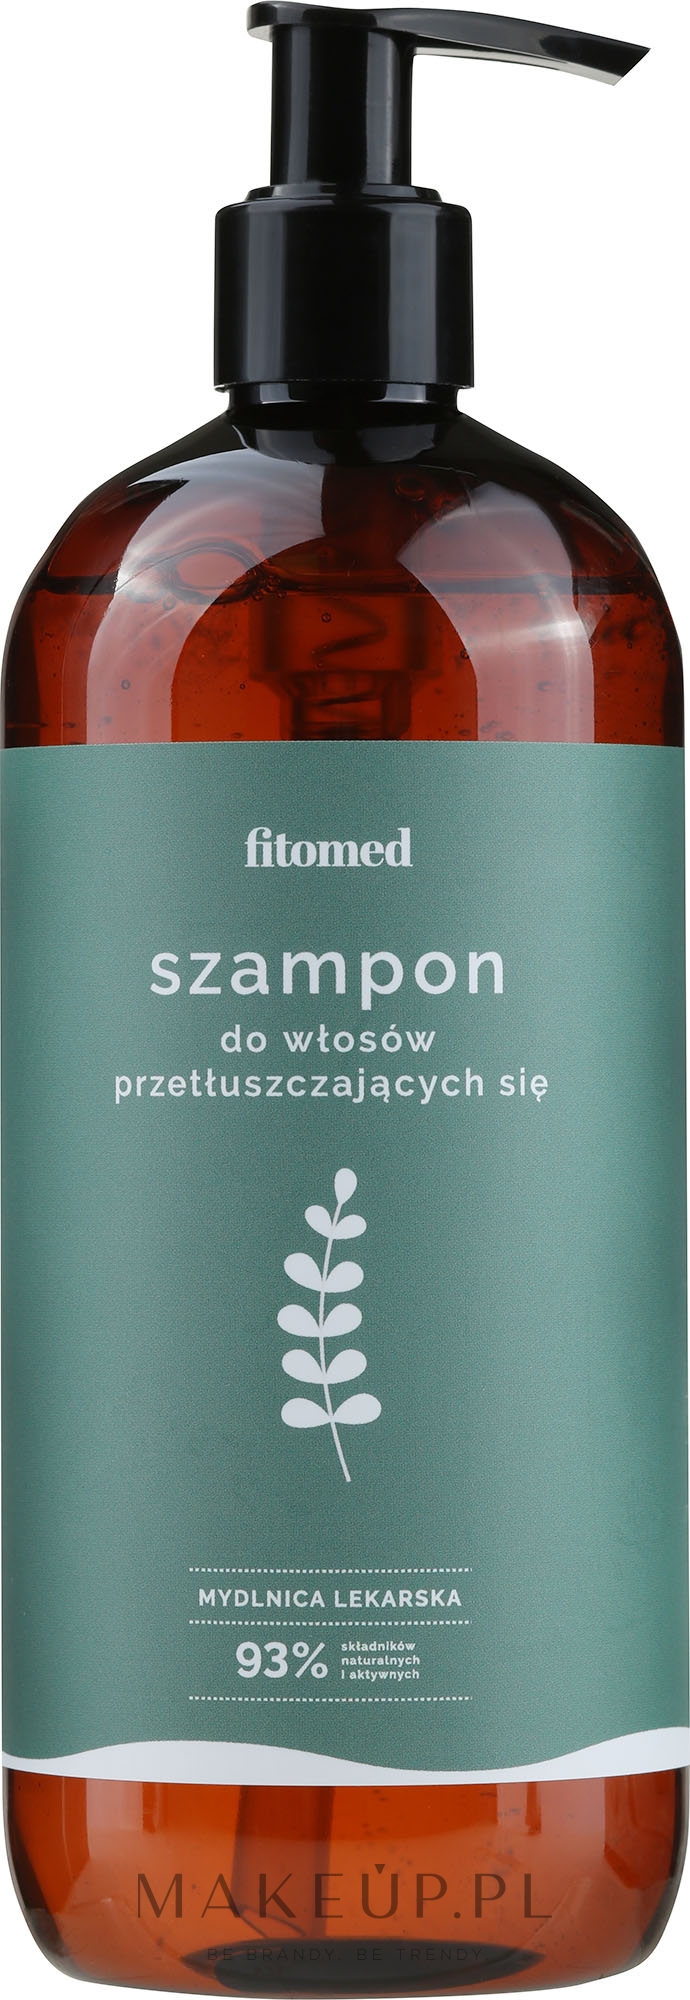 szampon fitomed z glinka